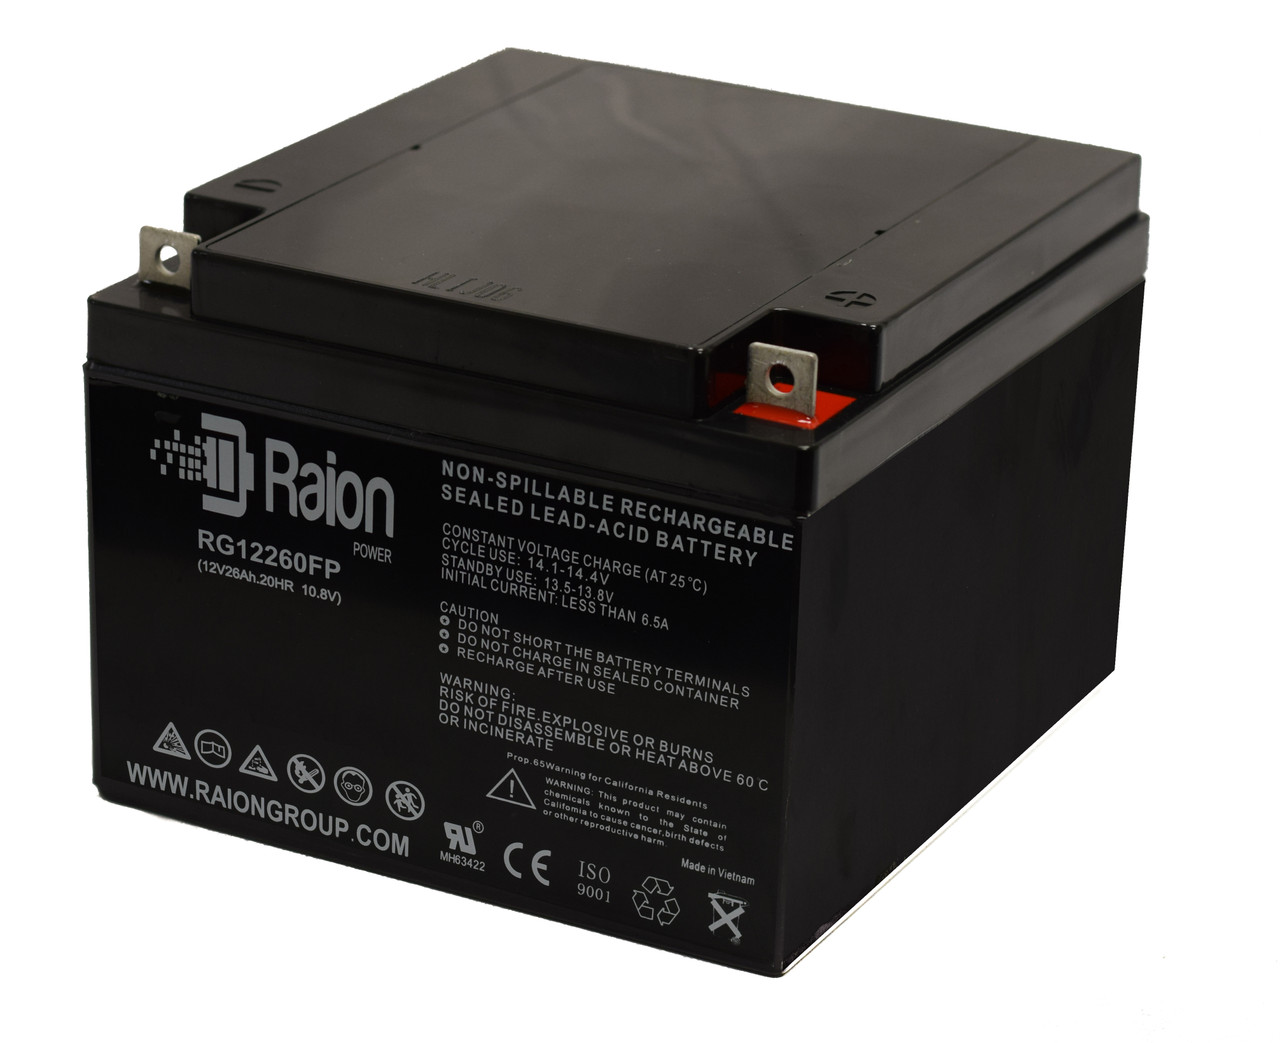 Raion Power Replacement 12V 26Ah Battery for Dewalt CMM625 Type 2 Lawn Mower - 1 Pack